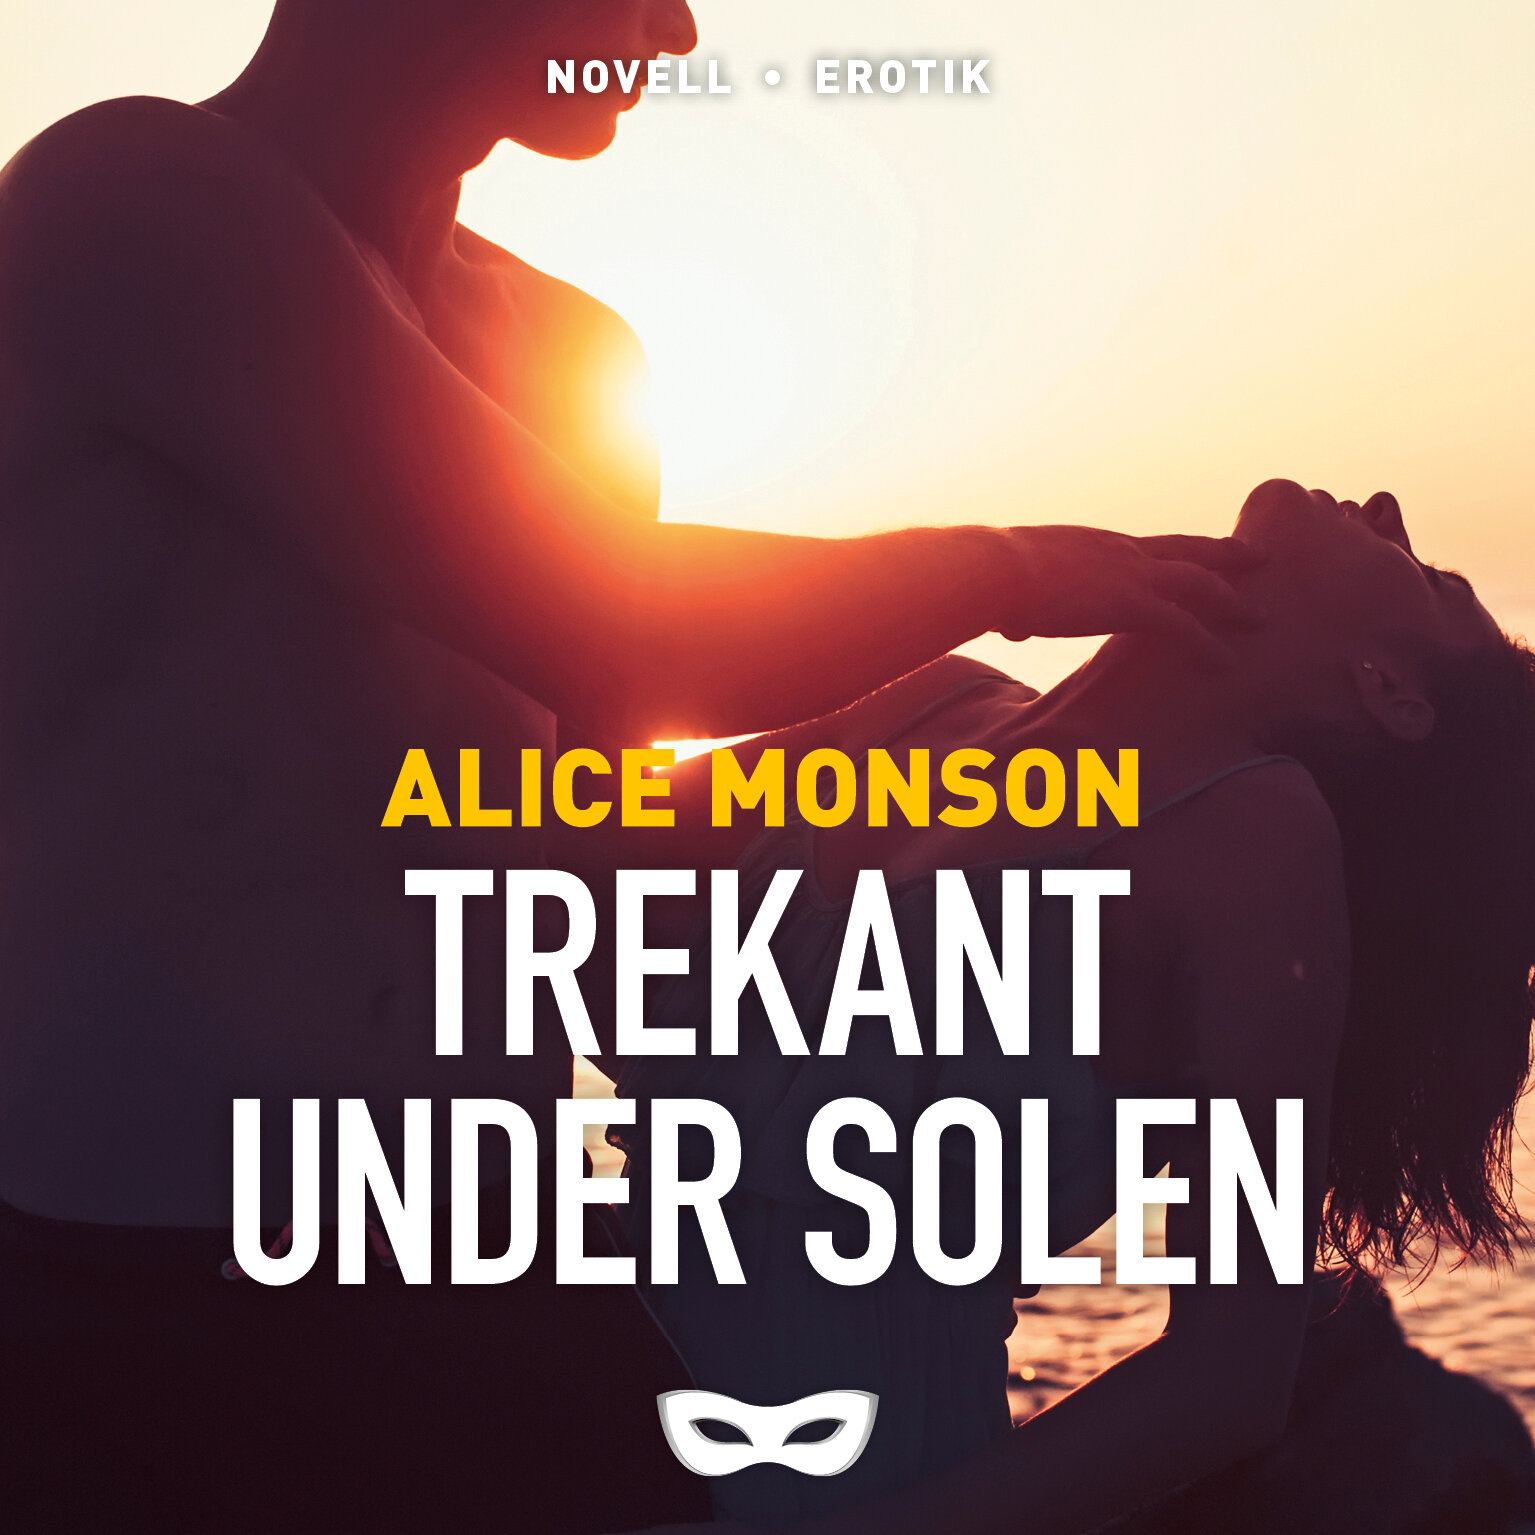 Alice Monson